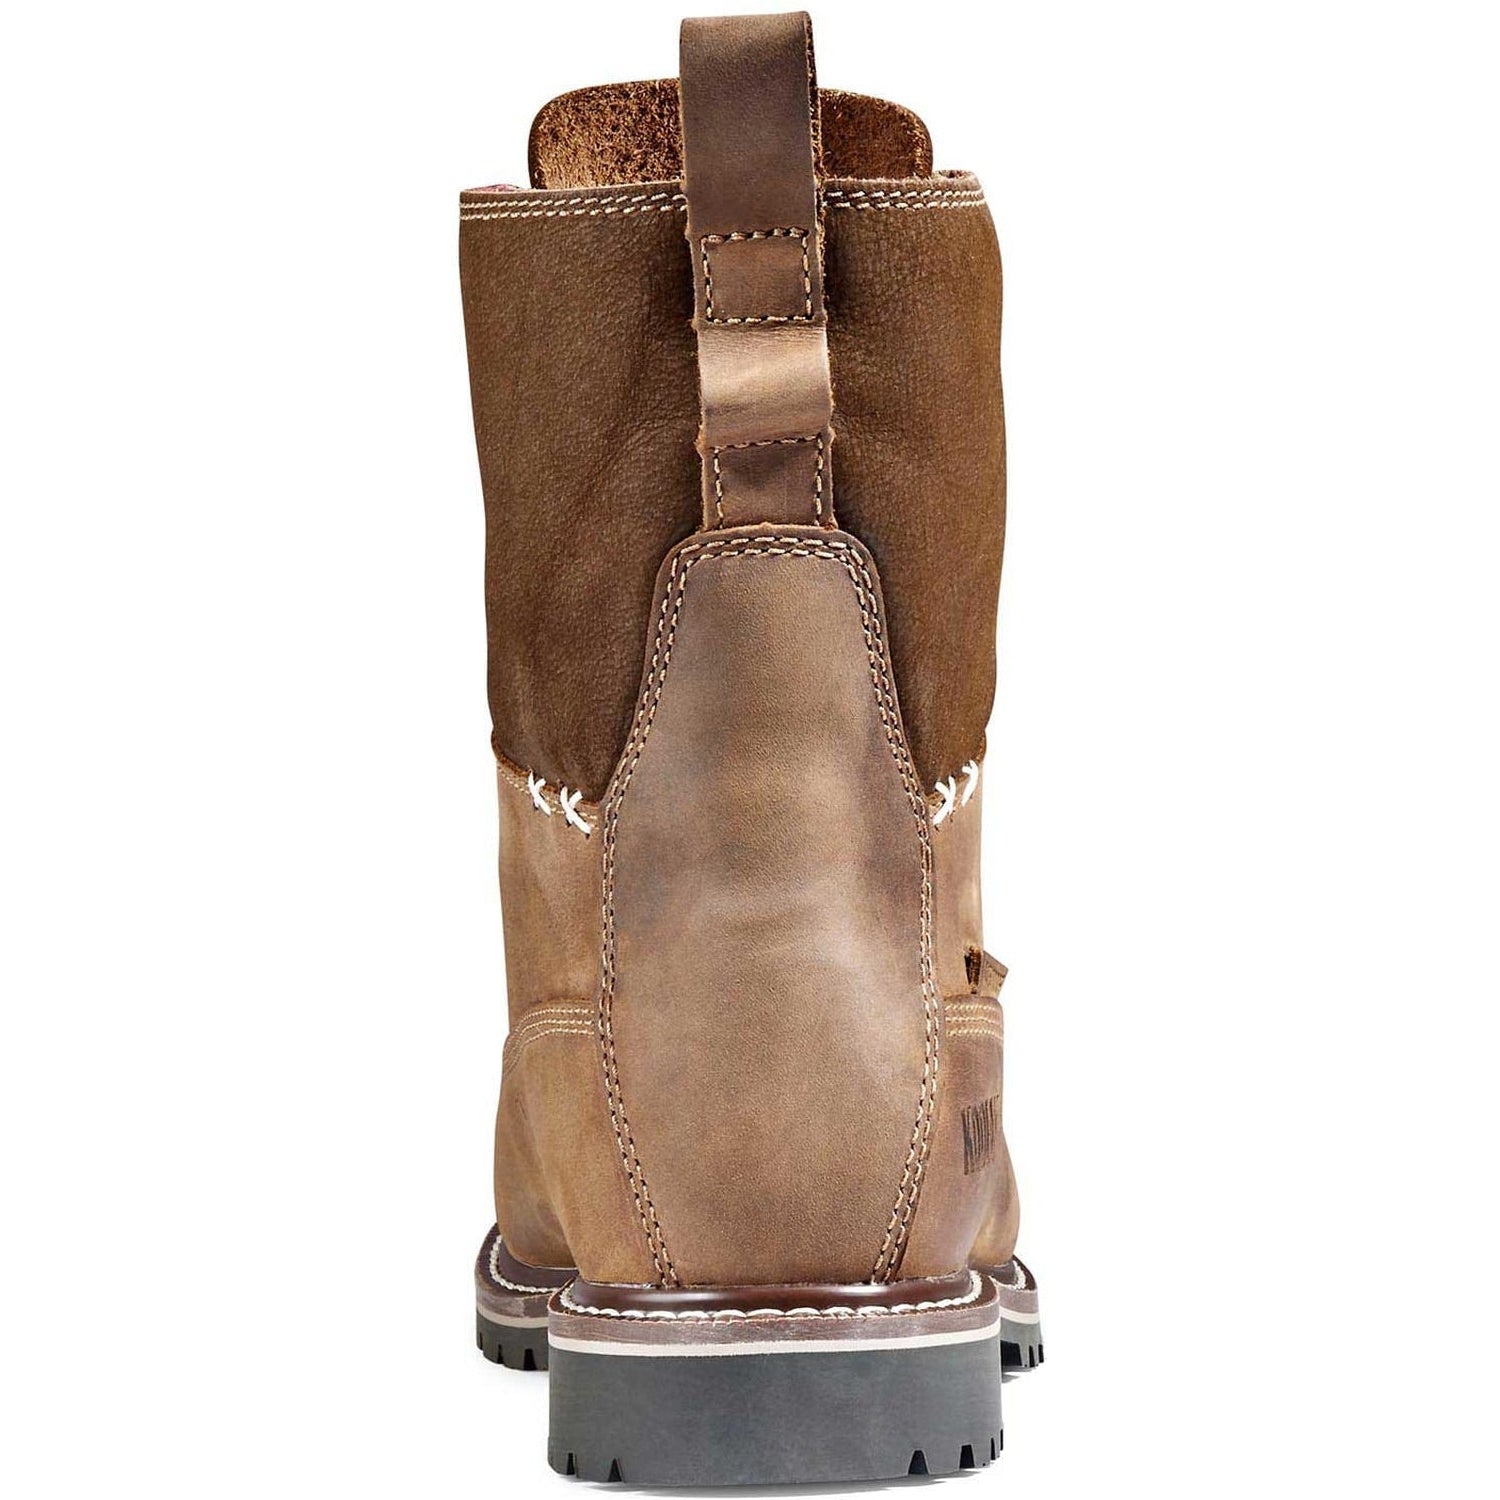 Kodiak Women's Bralorne 8" WP 200G Slip Resist Work Boot -Brown- 4TDTBN  - Overlook Boots